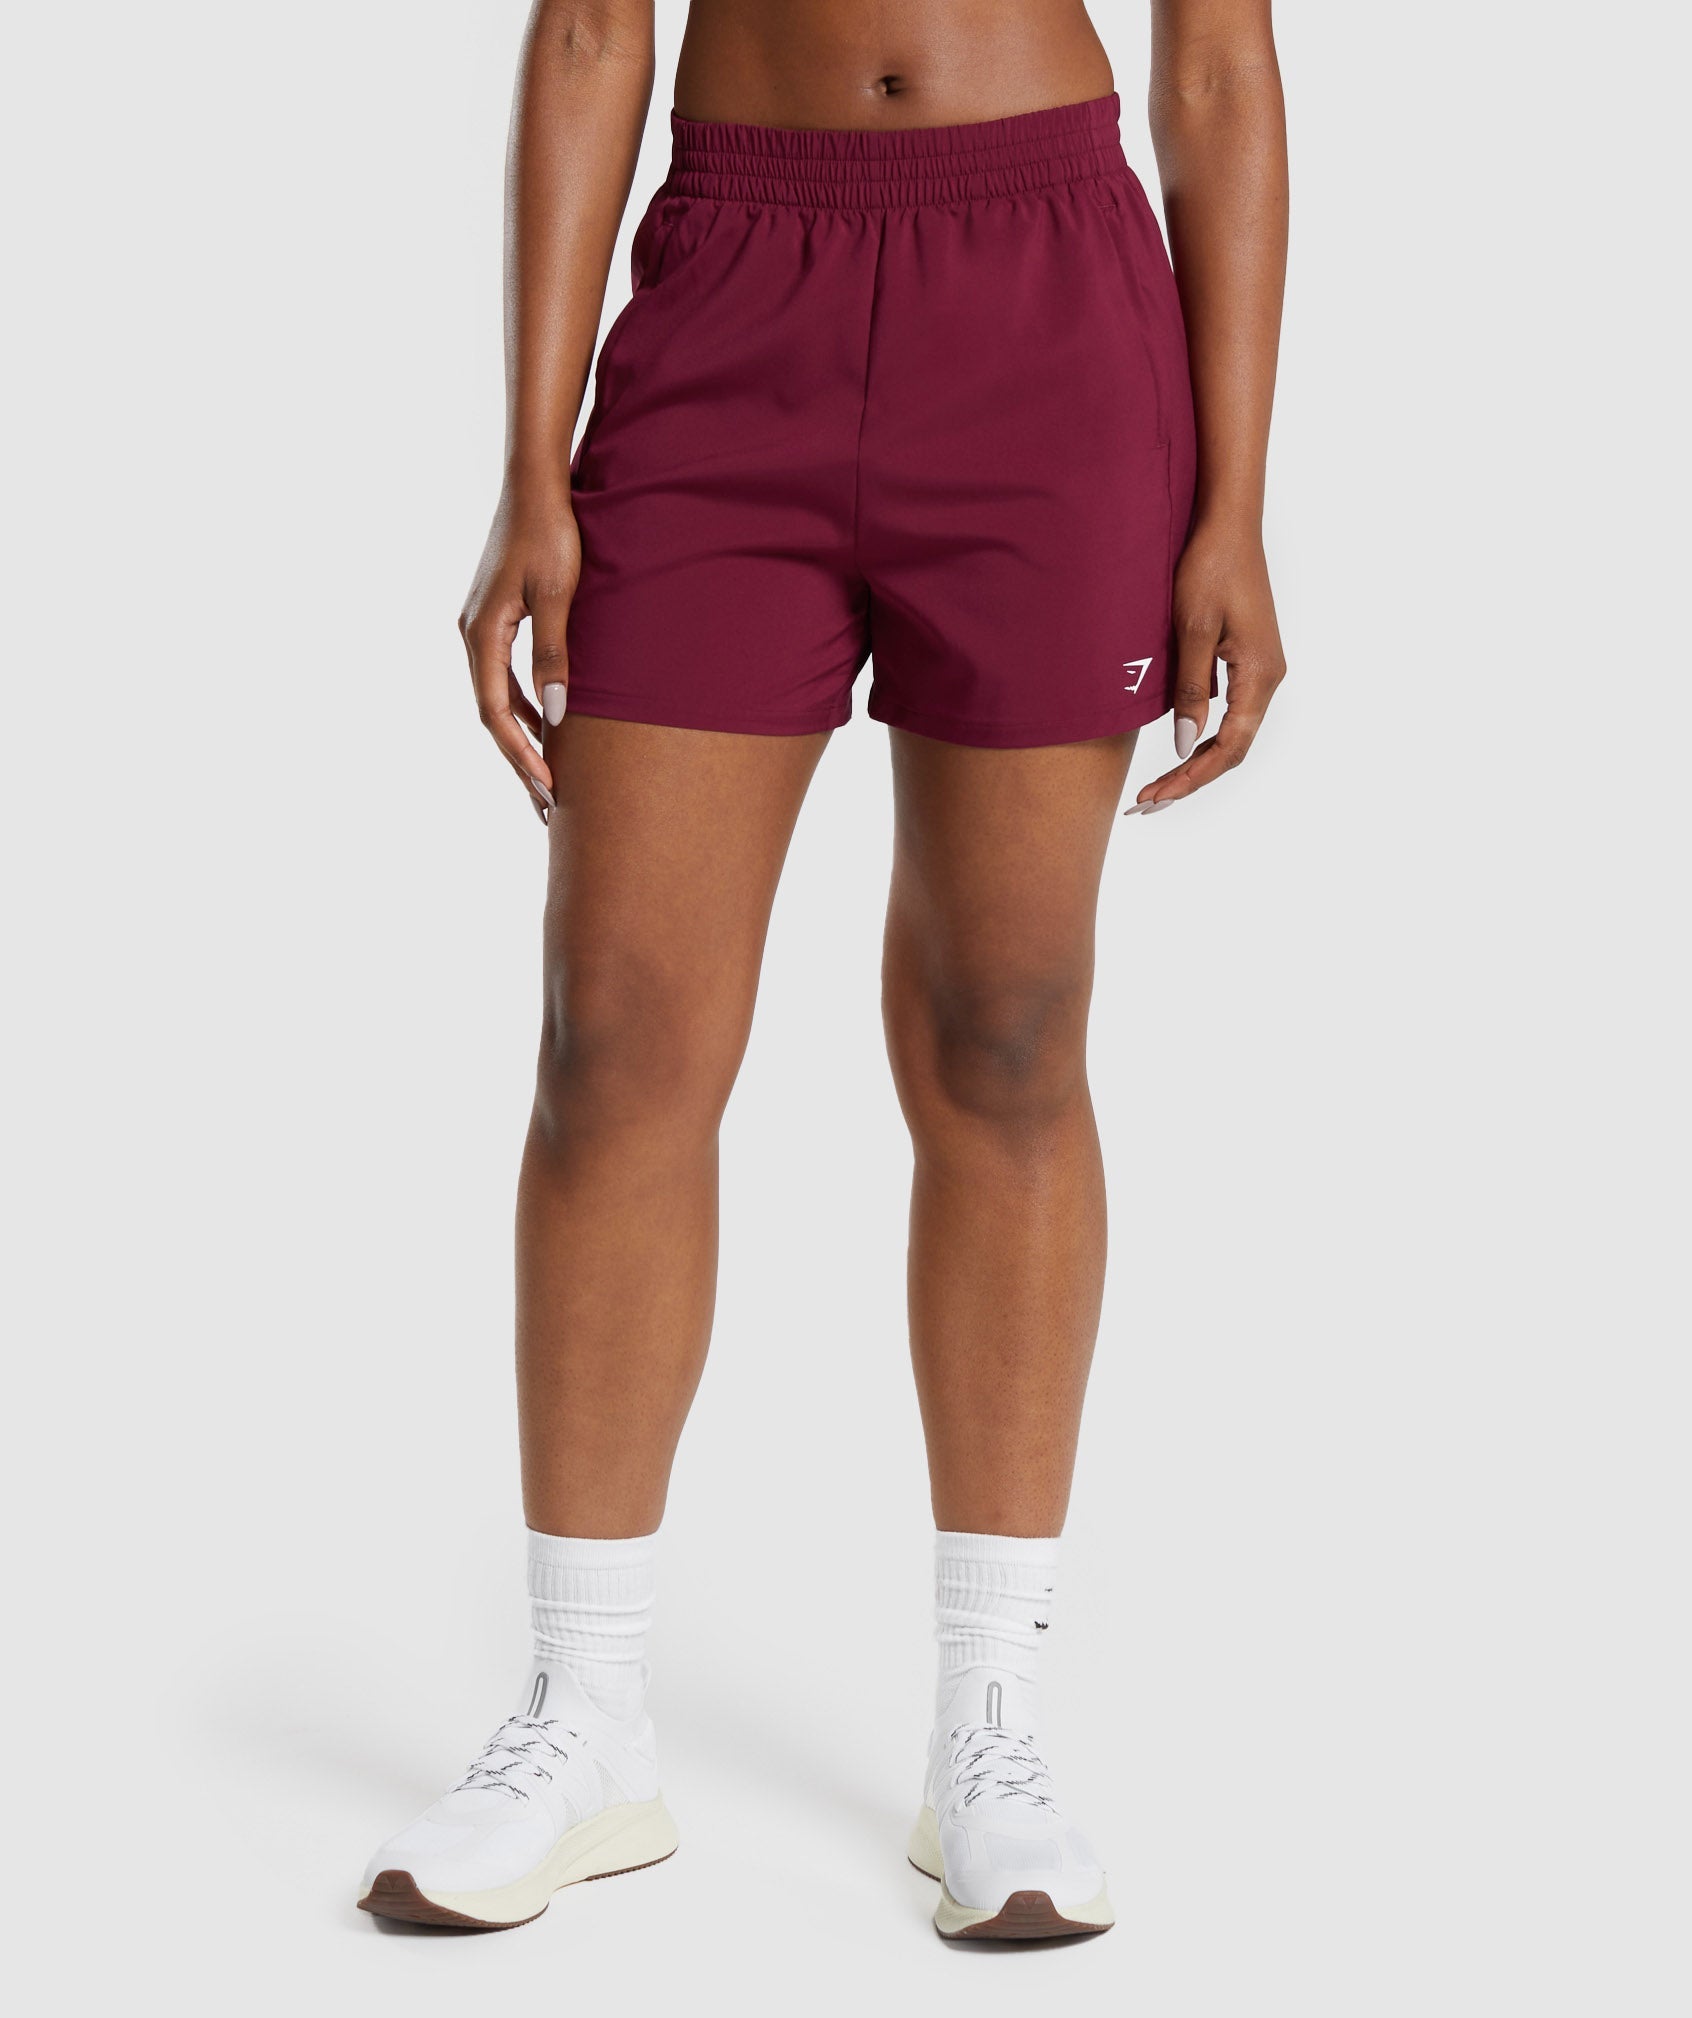 Gymshark Woven Pocket Shorts - Camo Brown